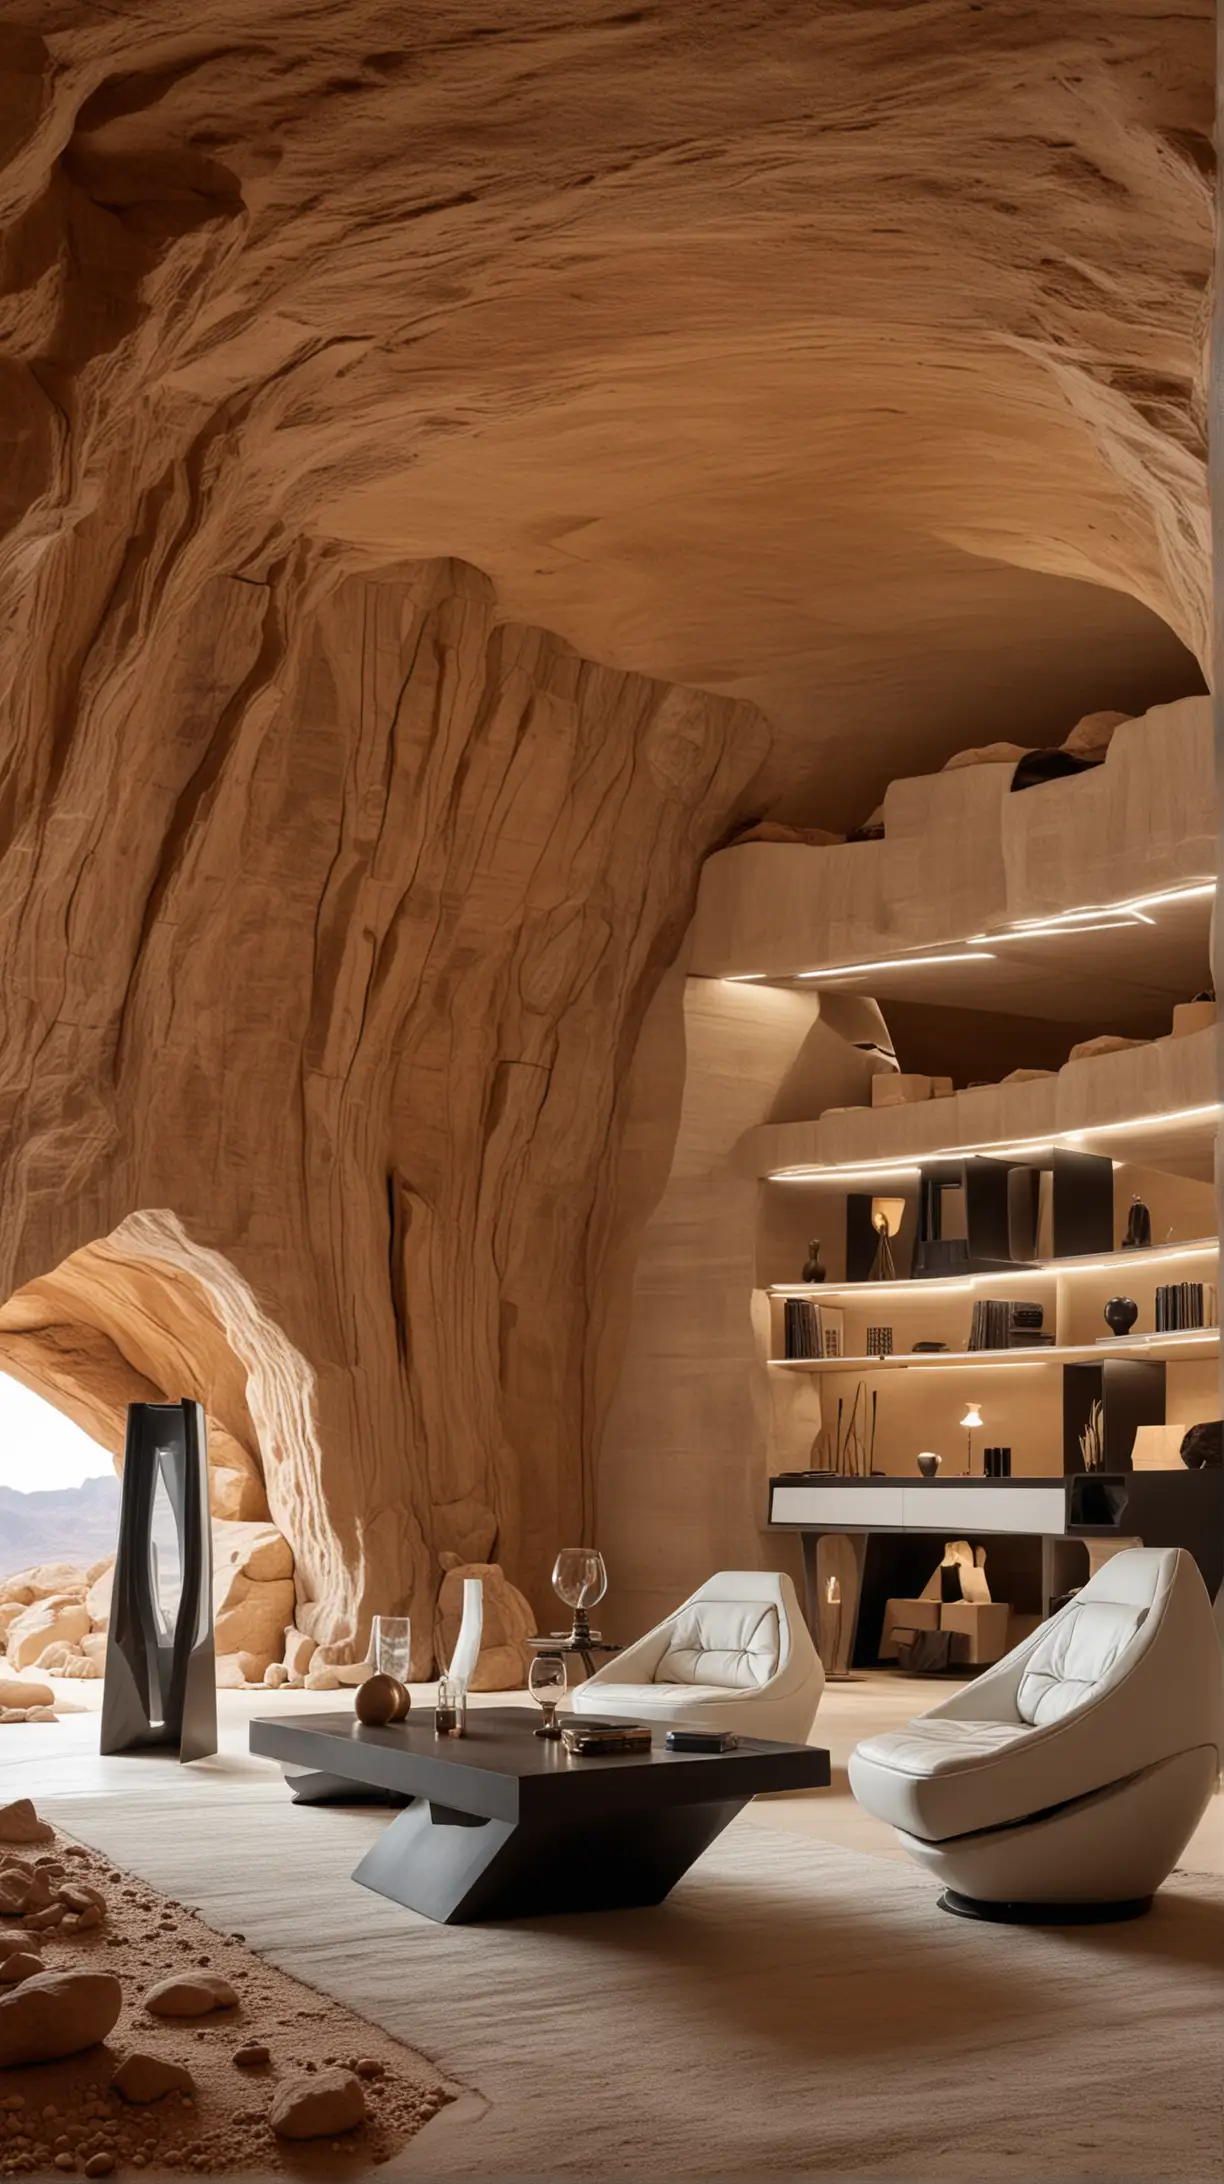 Desert Cave Vault with UltraModern Designer Furniture